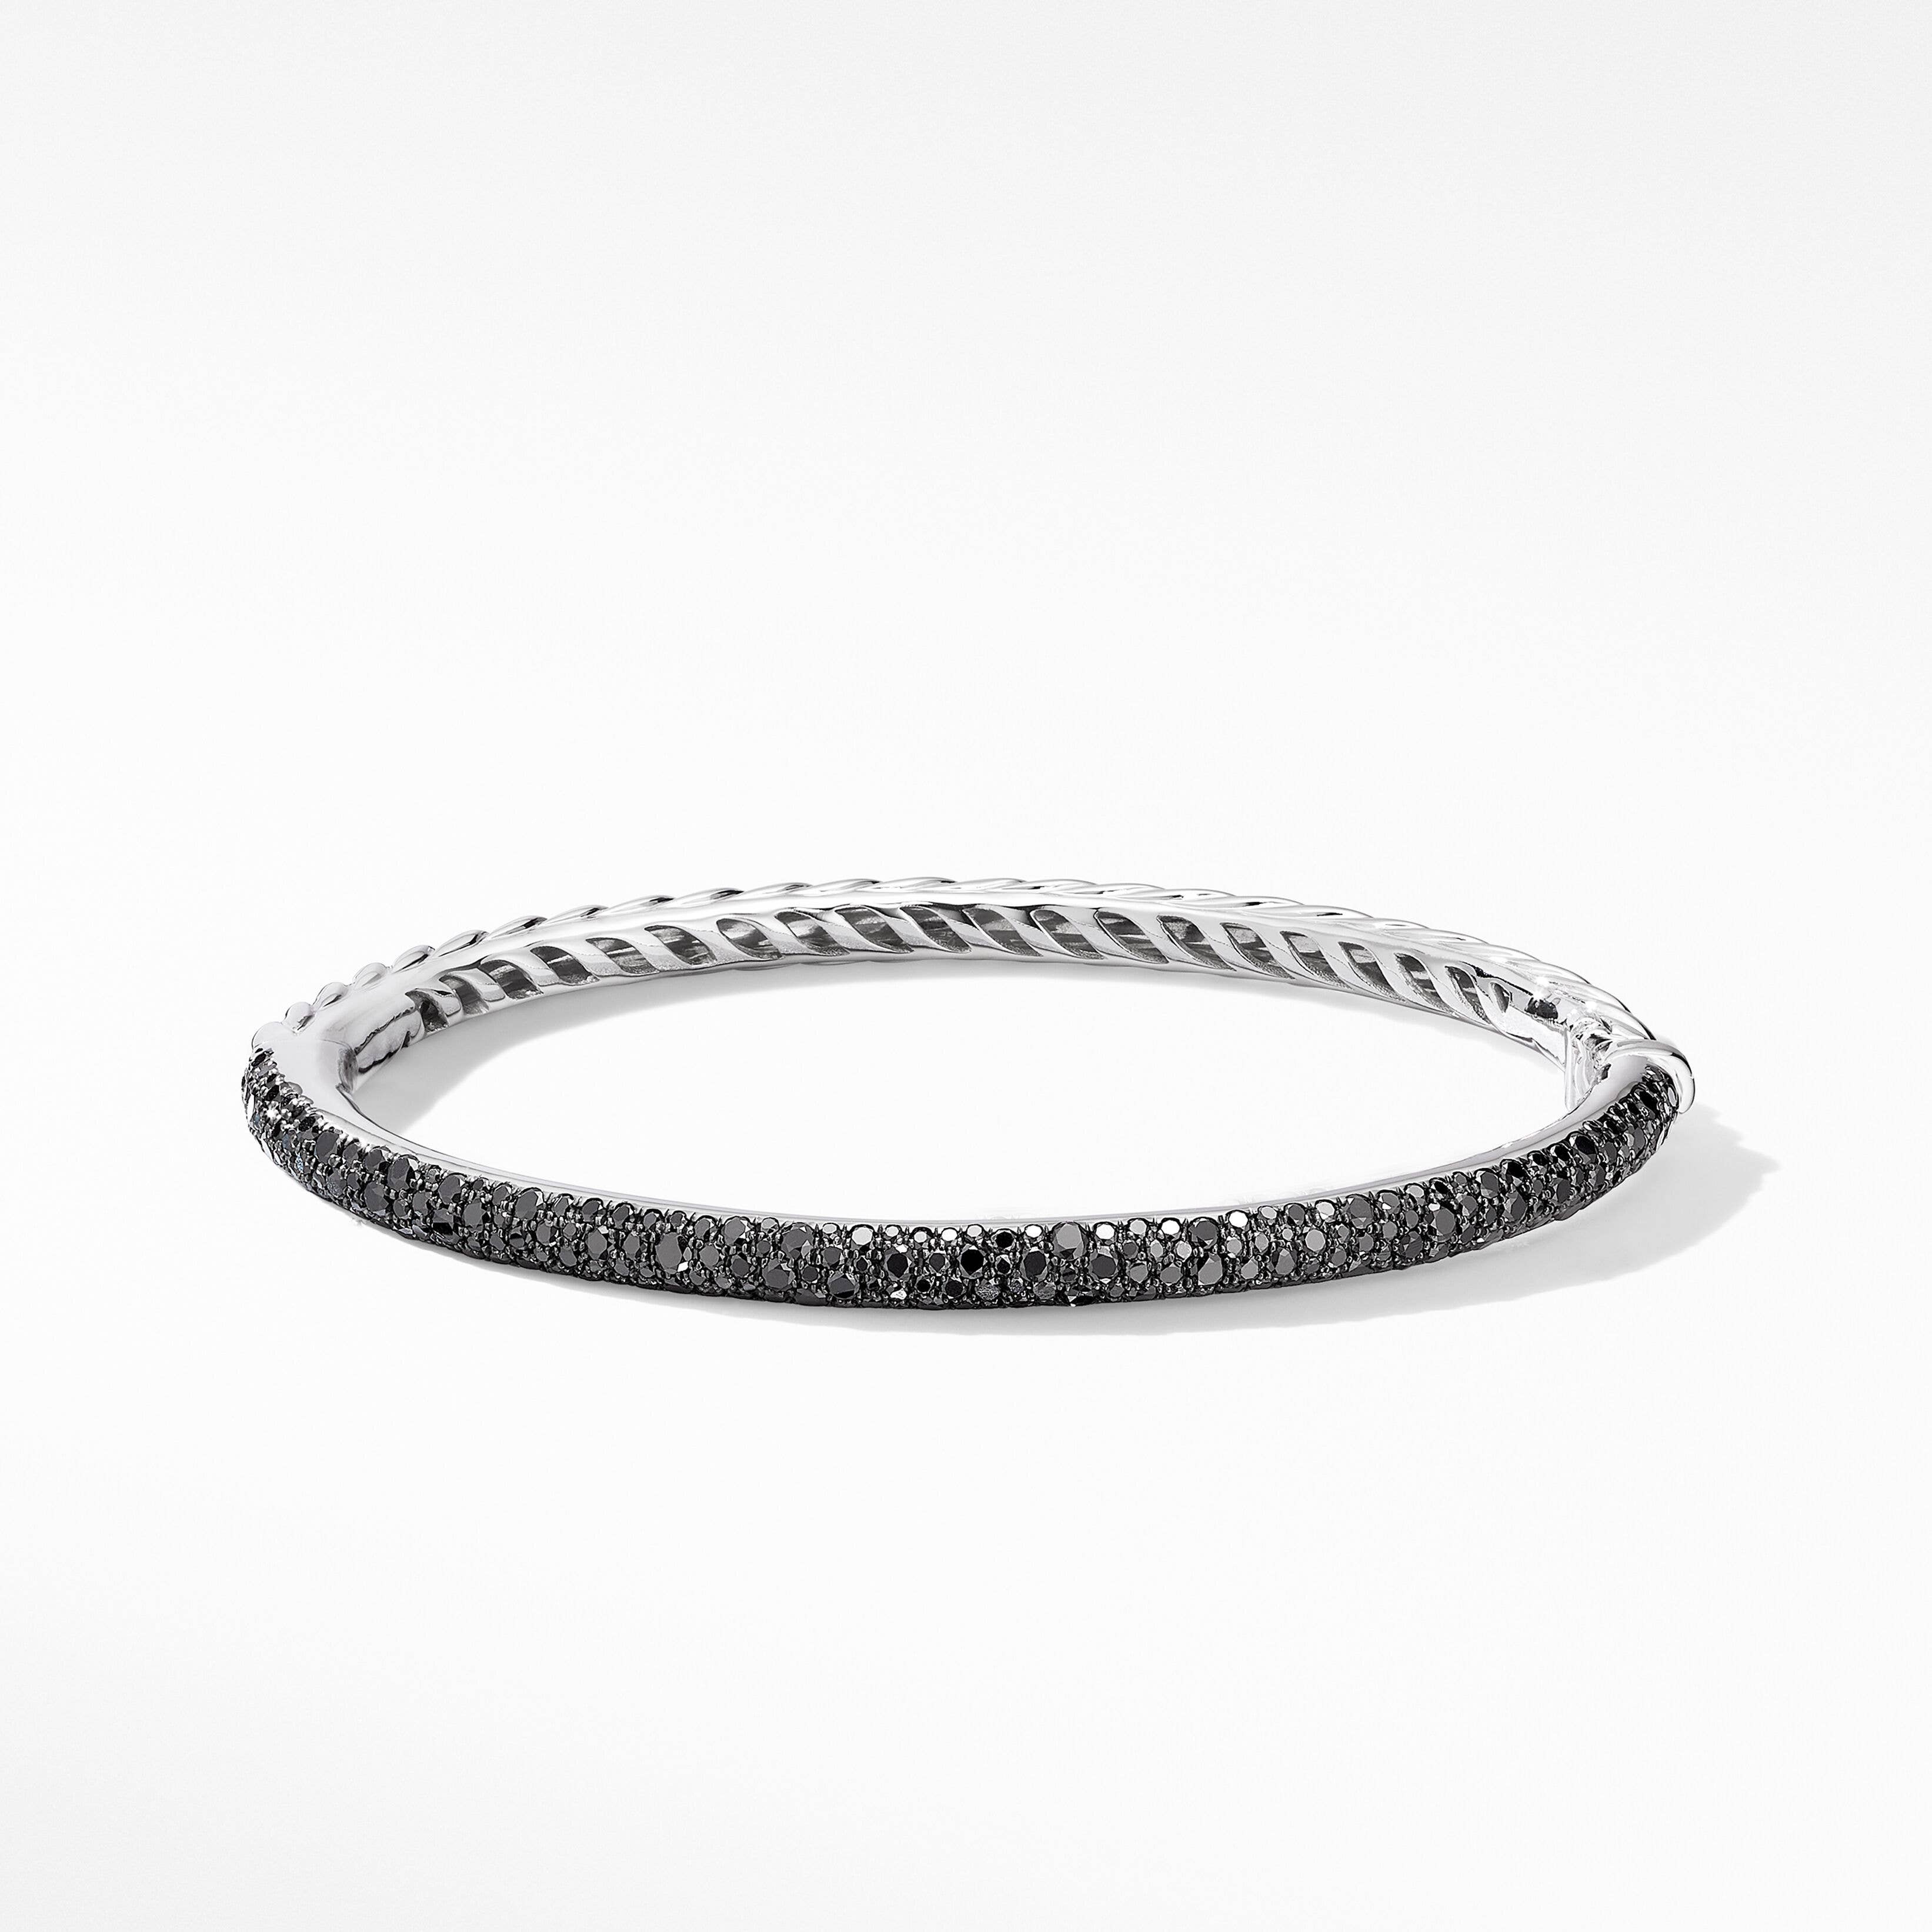 Cable Bangle Bracelet in 18K White Gold with Pavé Black Diamonds